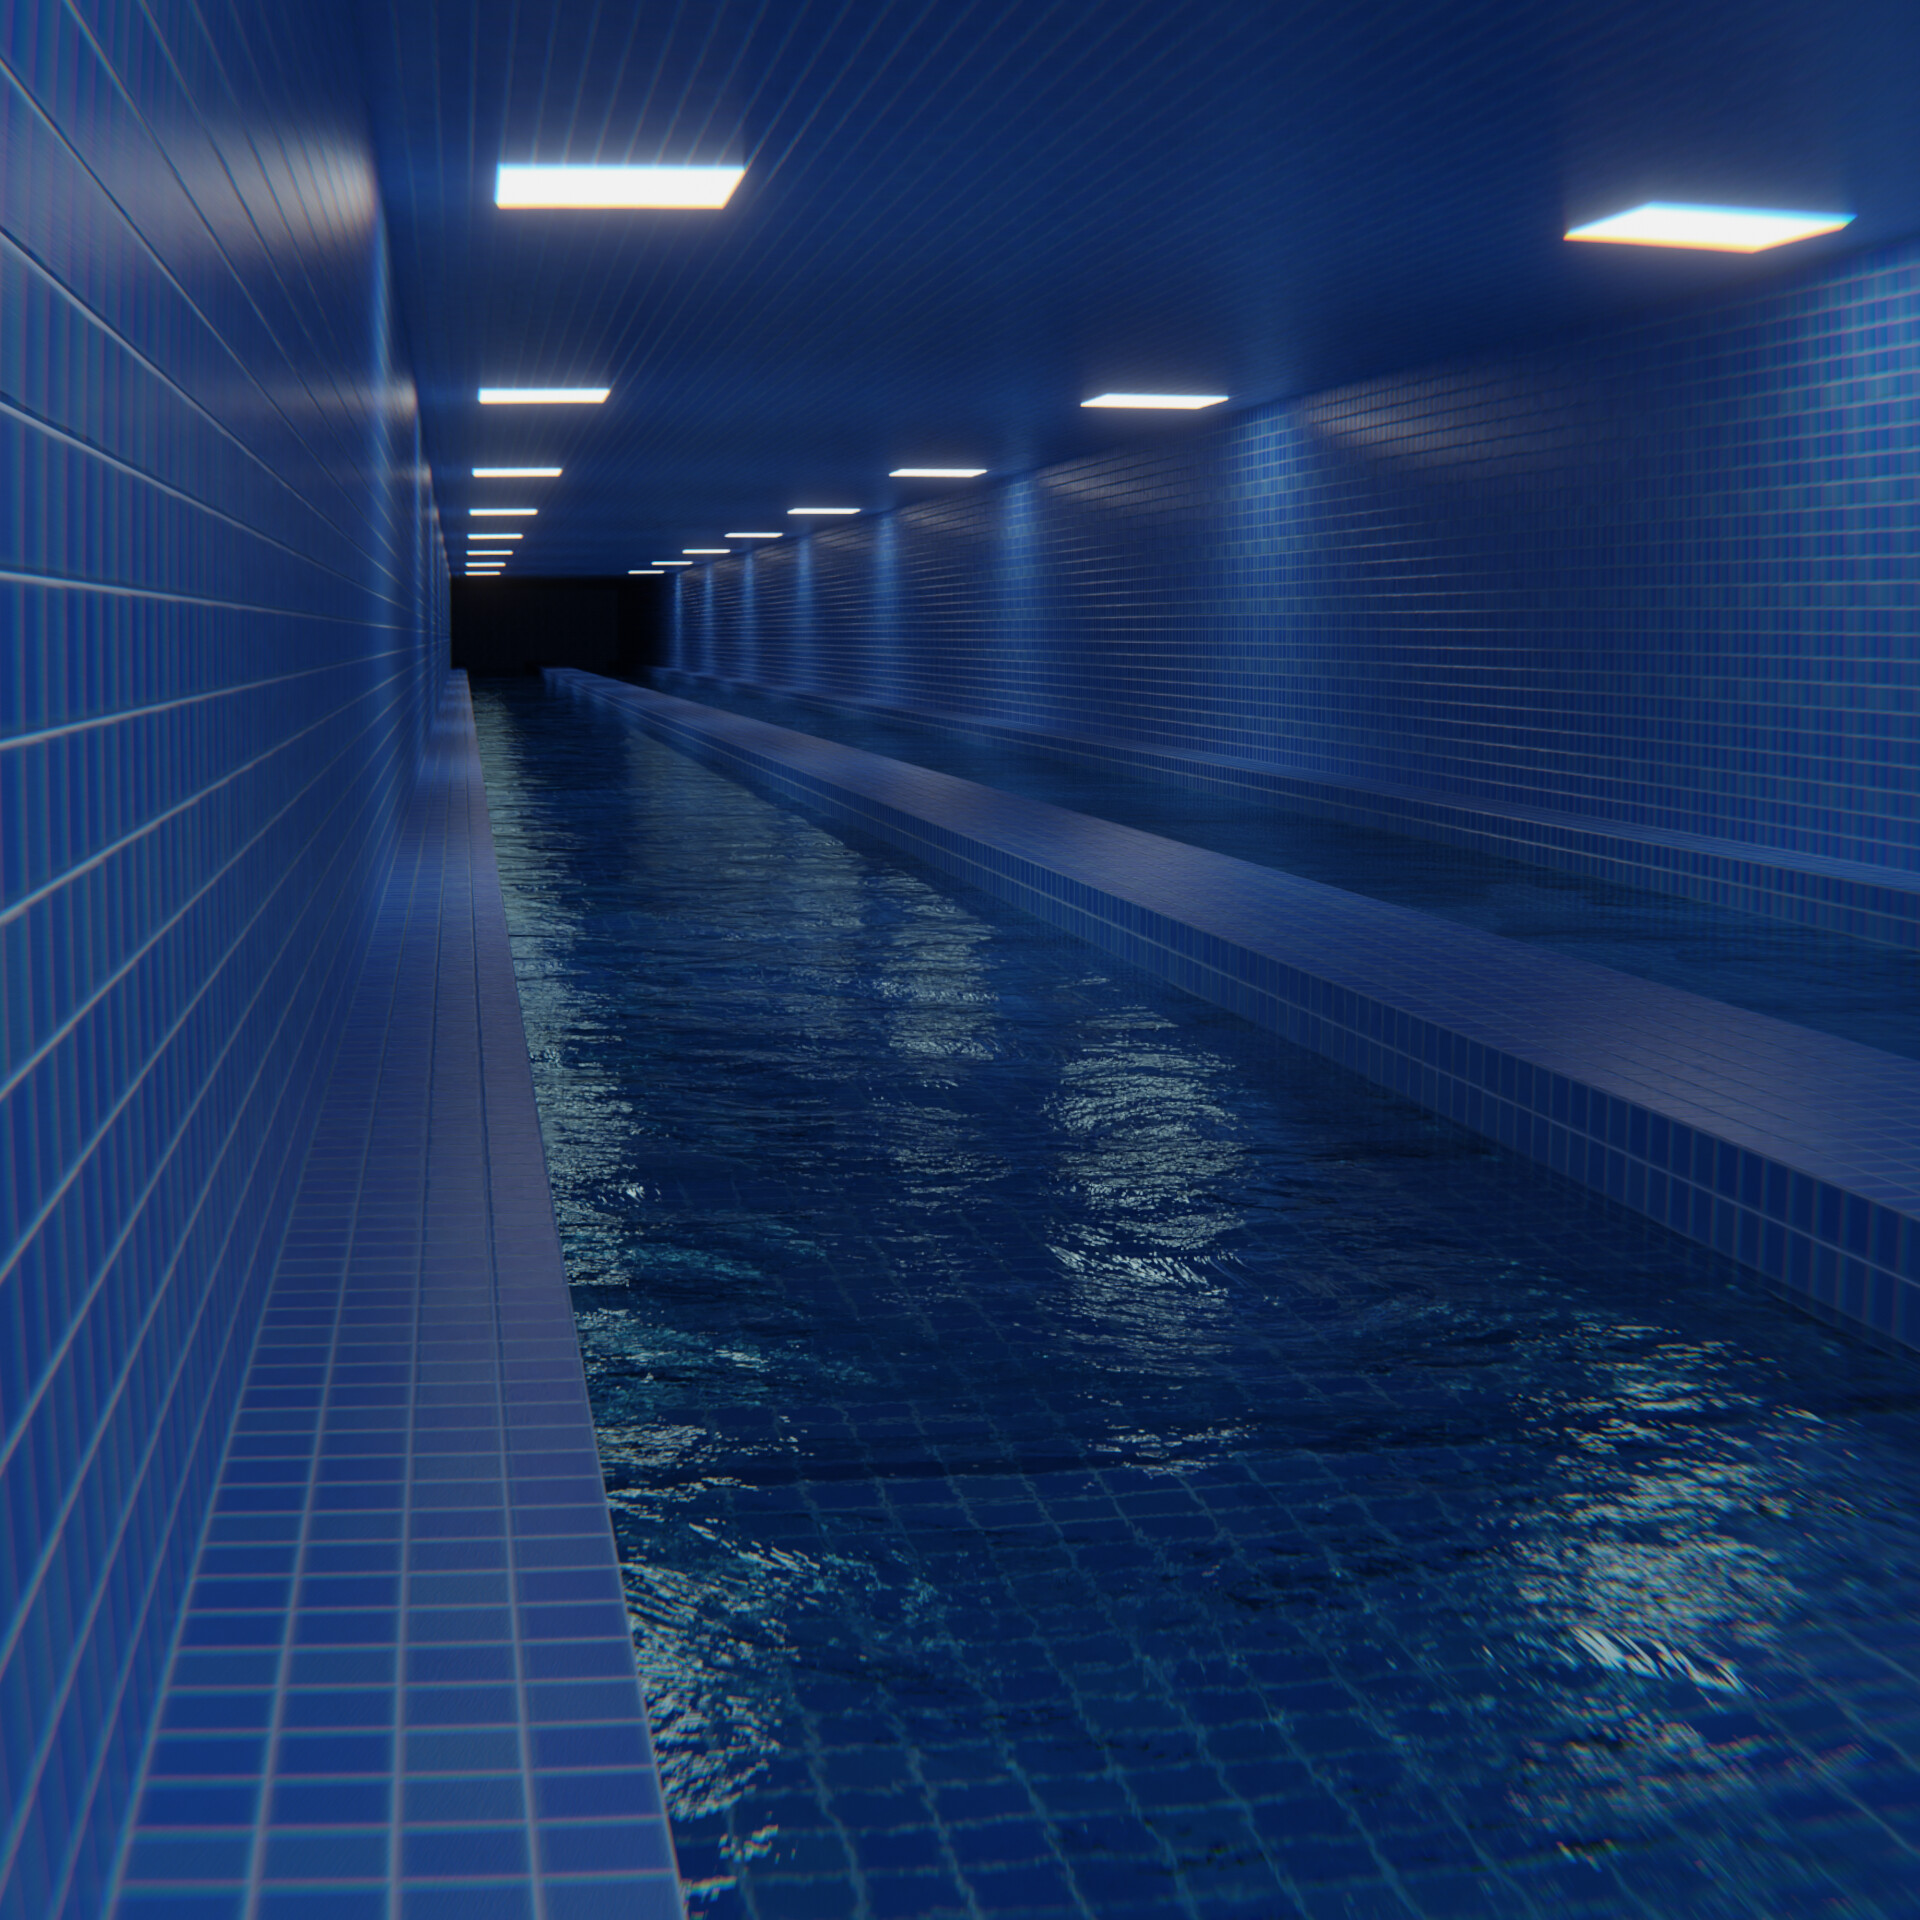 ArtStation - The Big Pool Rooms